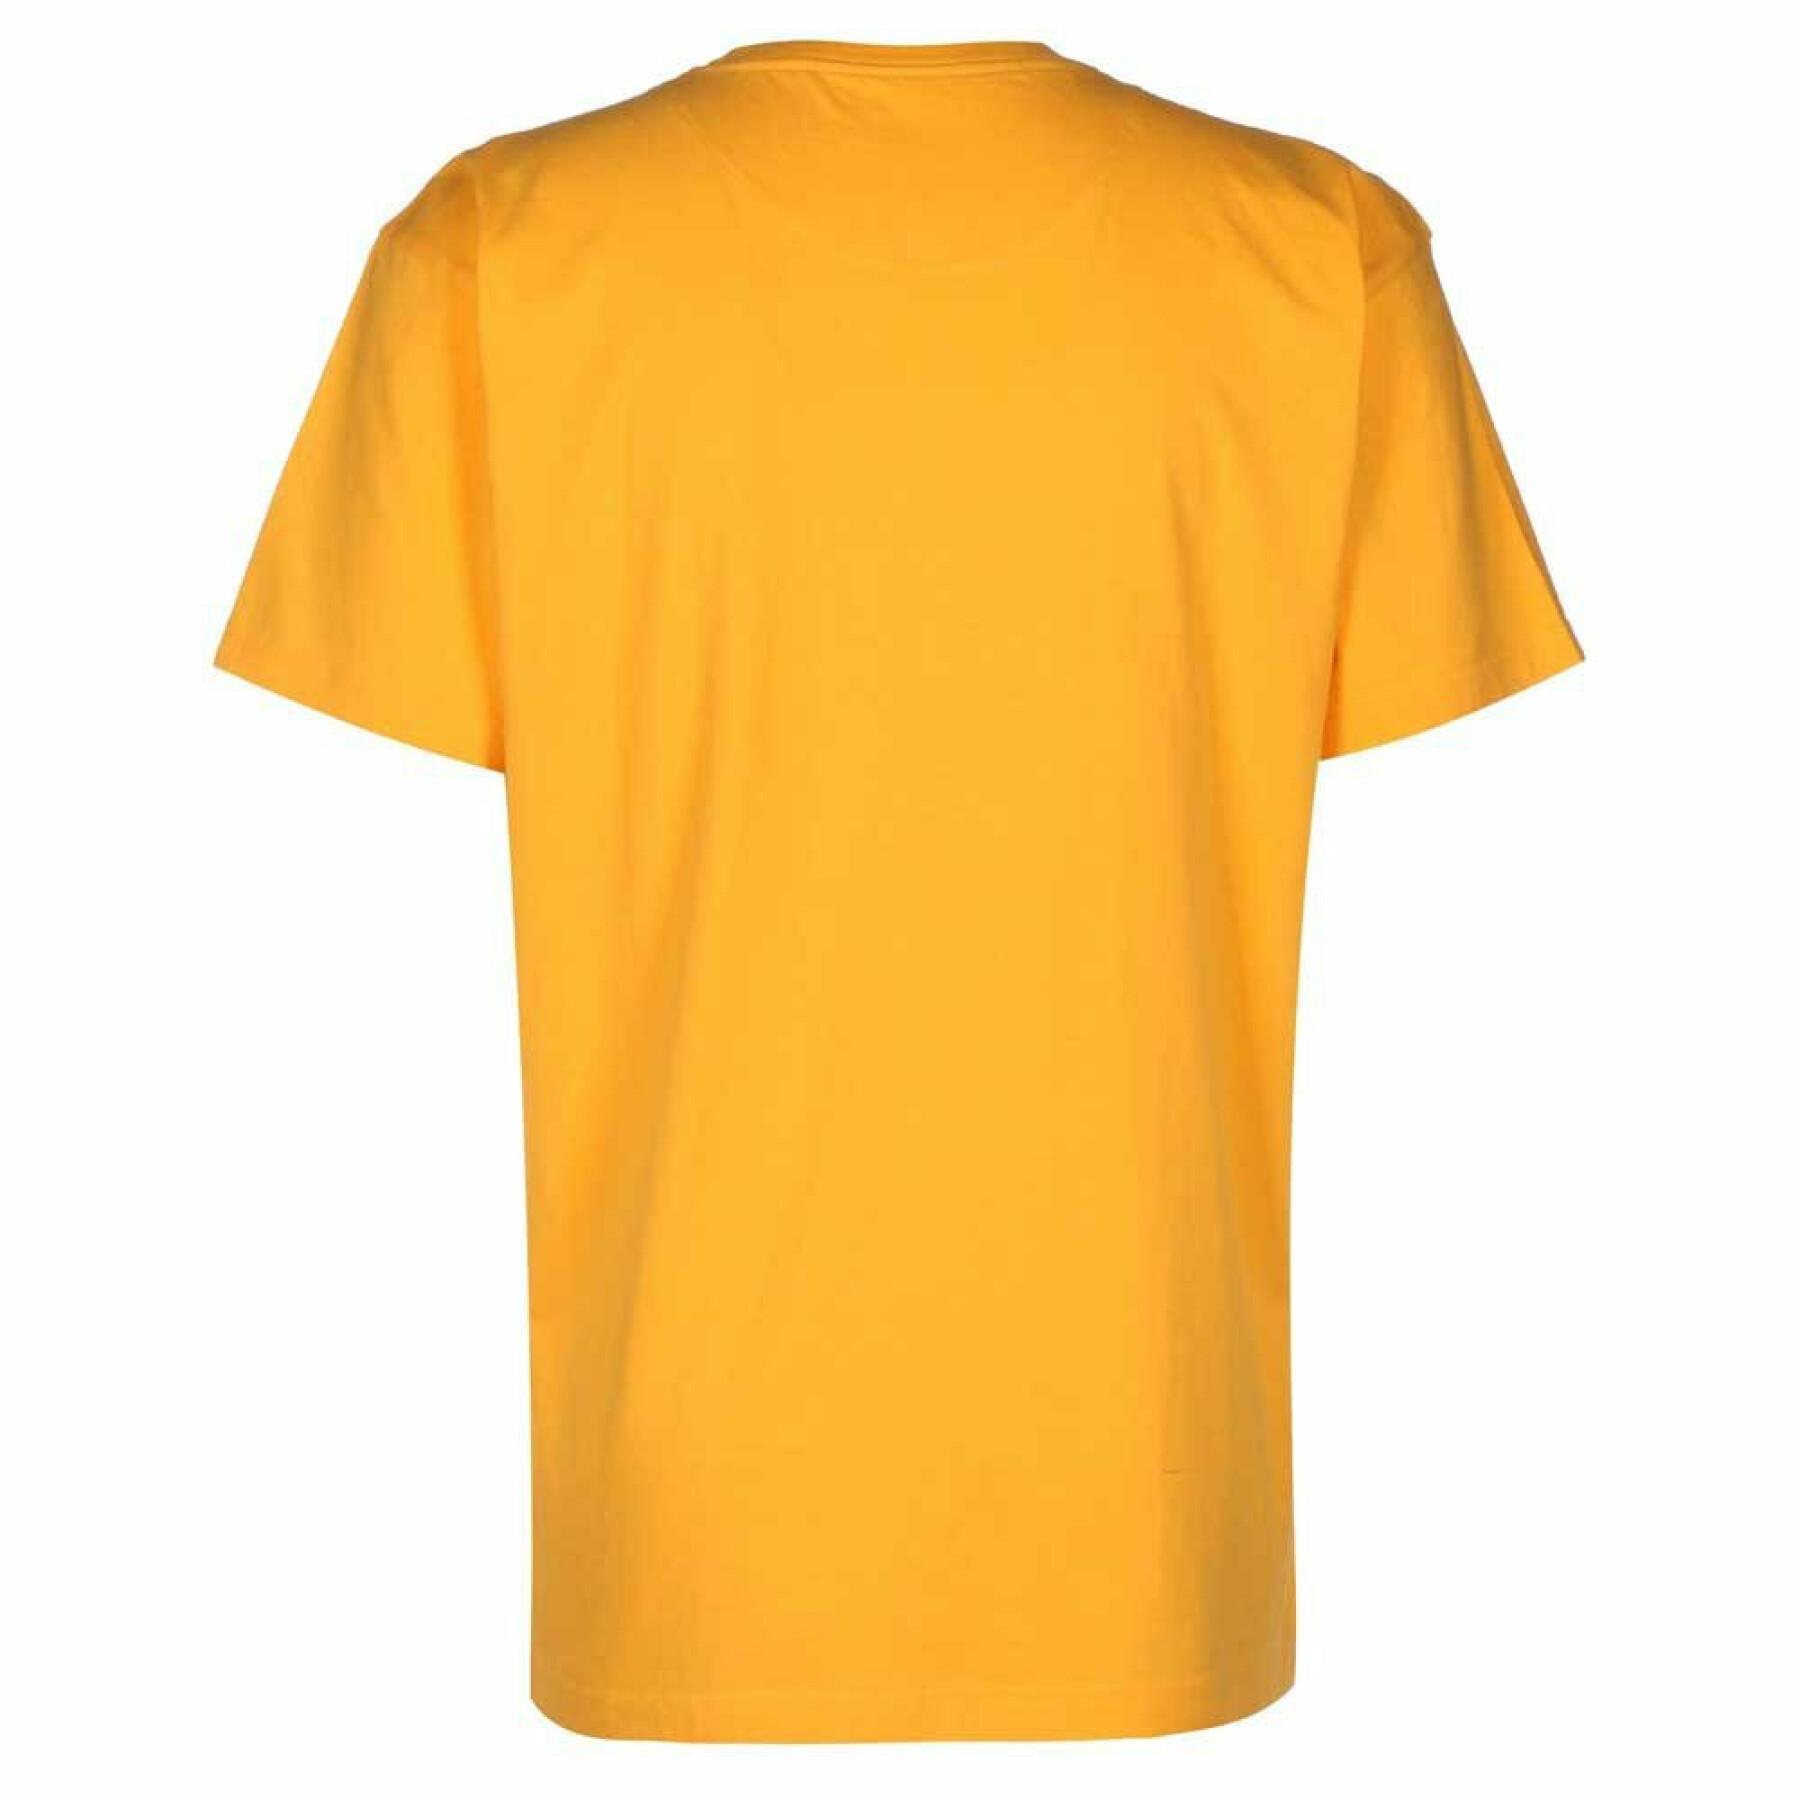 T-shirt com o logótipo Los Angeles Lakers 2021/22